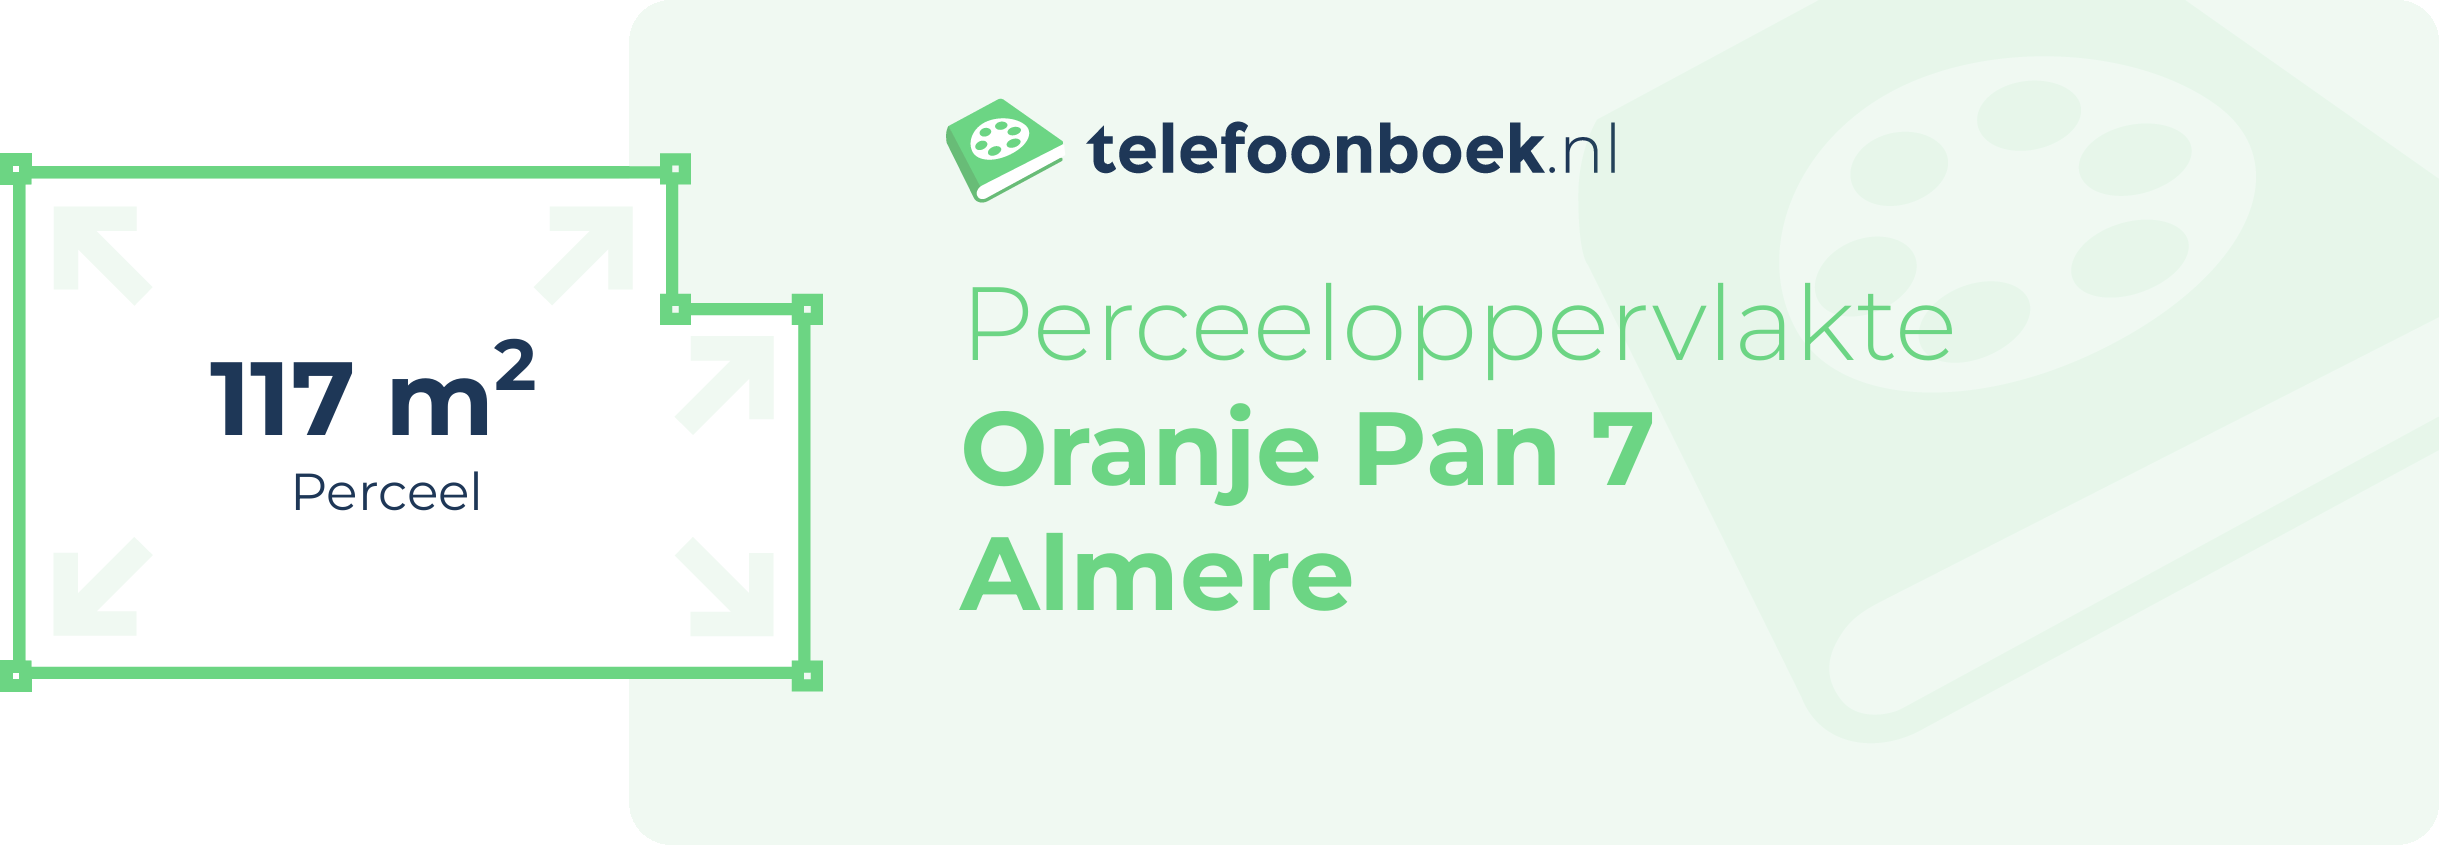 Perceeloppervlakte Oranje Pan 7 Almere